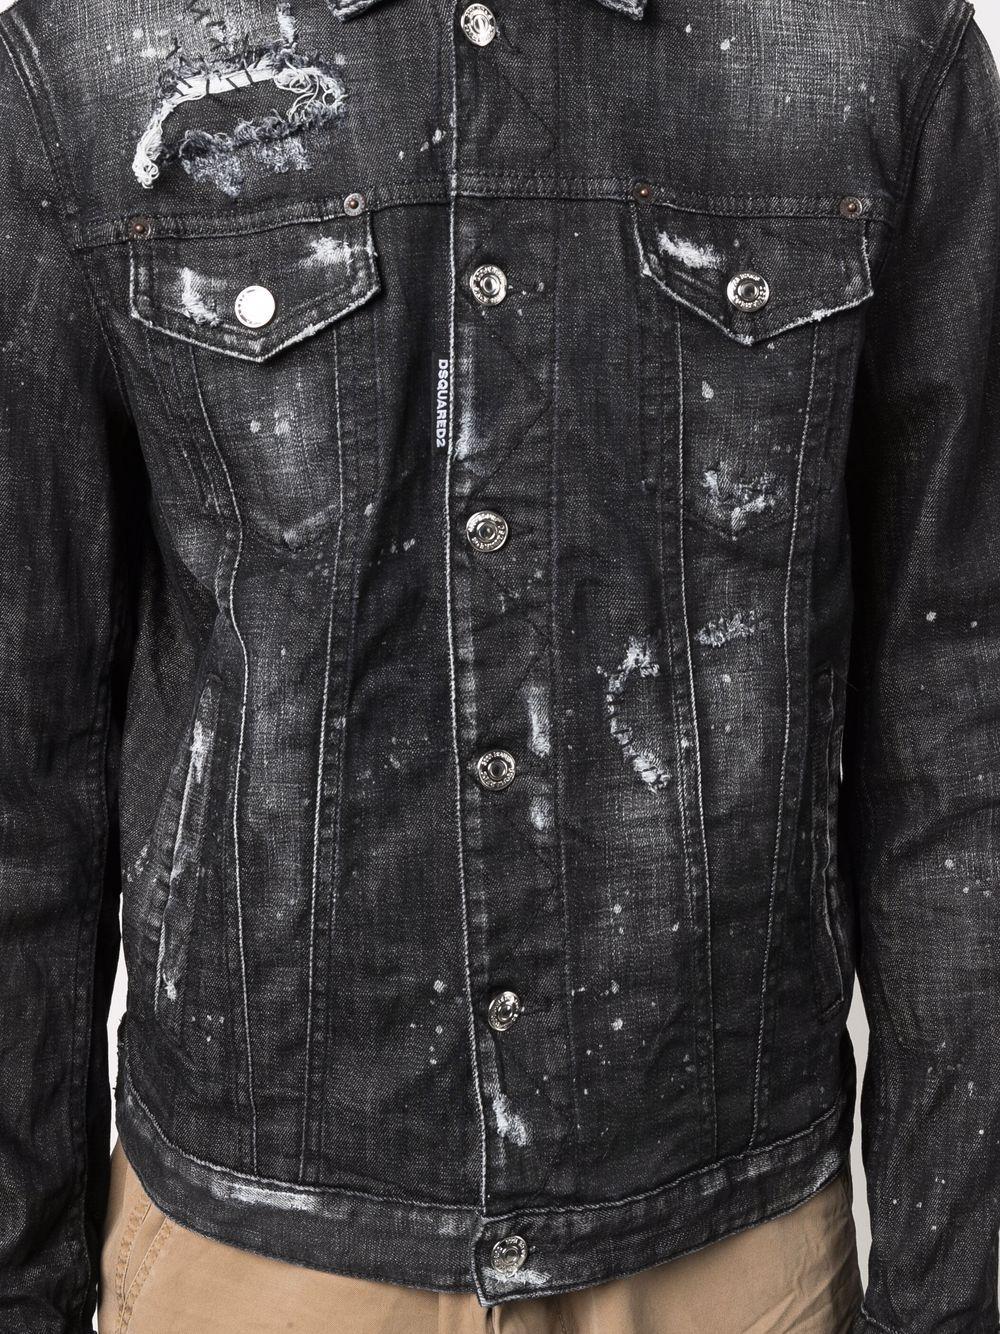 DSquared² Distressed-effect Denim Jacket in Nero (Black) for Men - Save 39%  | Lyst